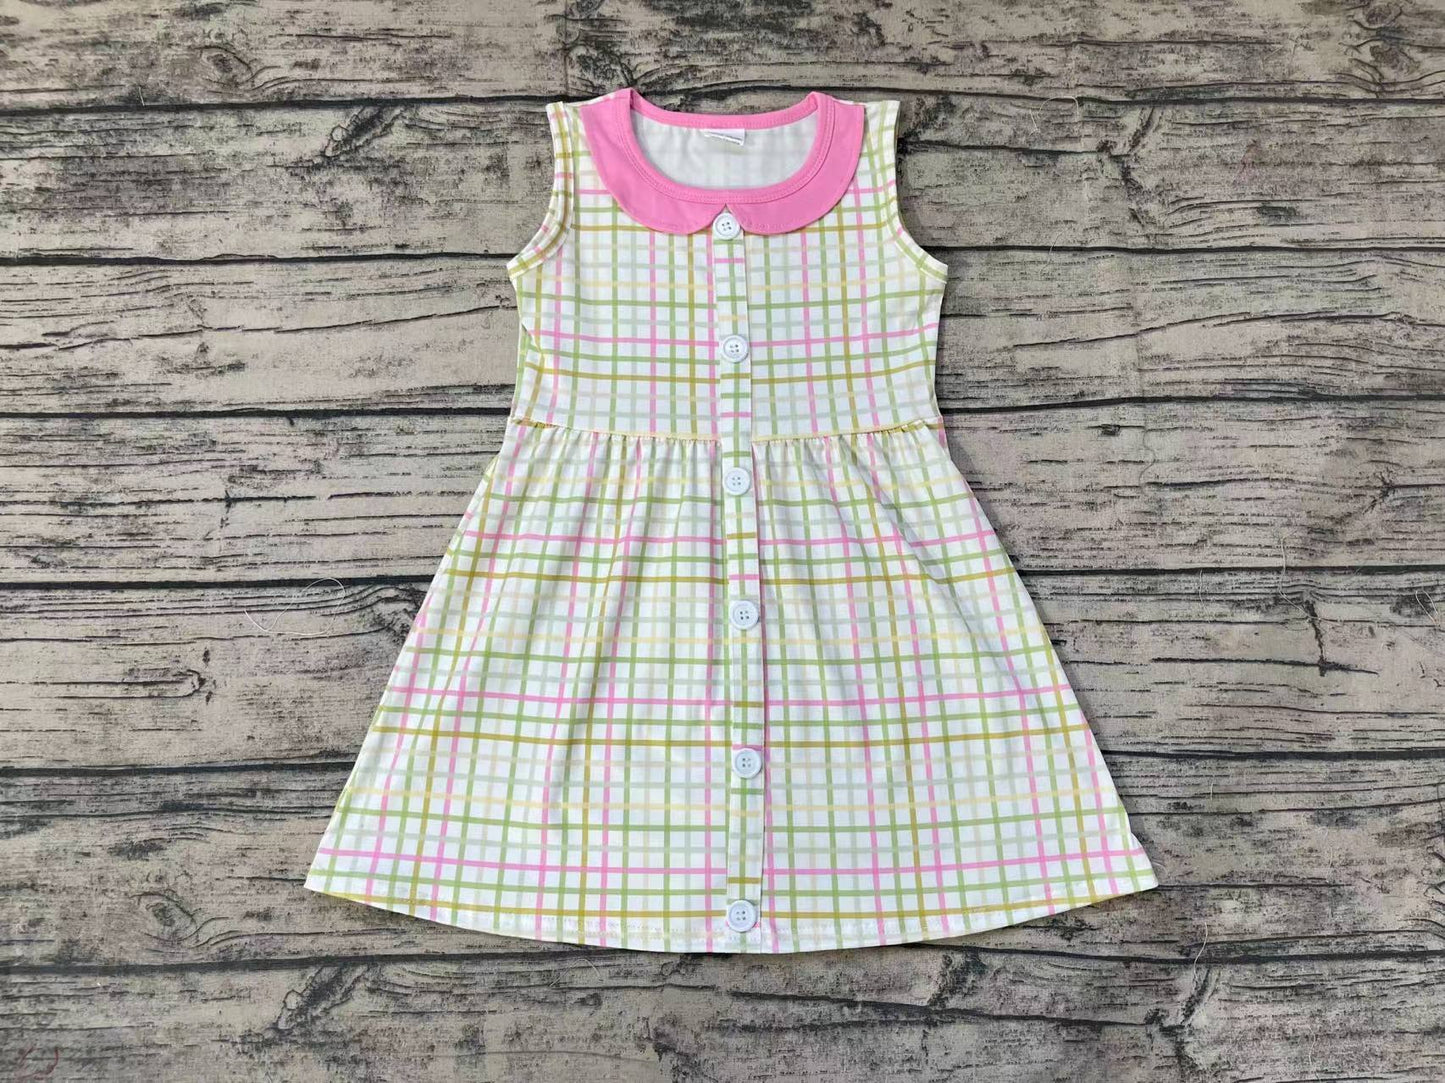 Baby Girls Easter Green Pink Checkered Knee Length Dresses